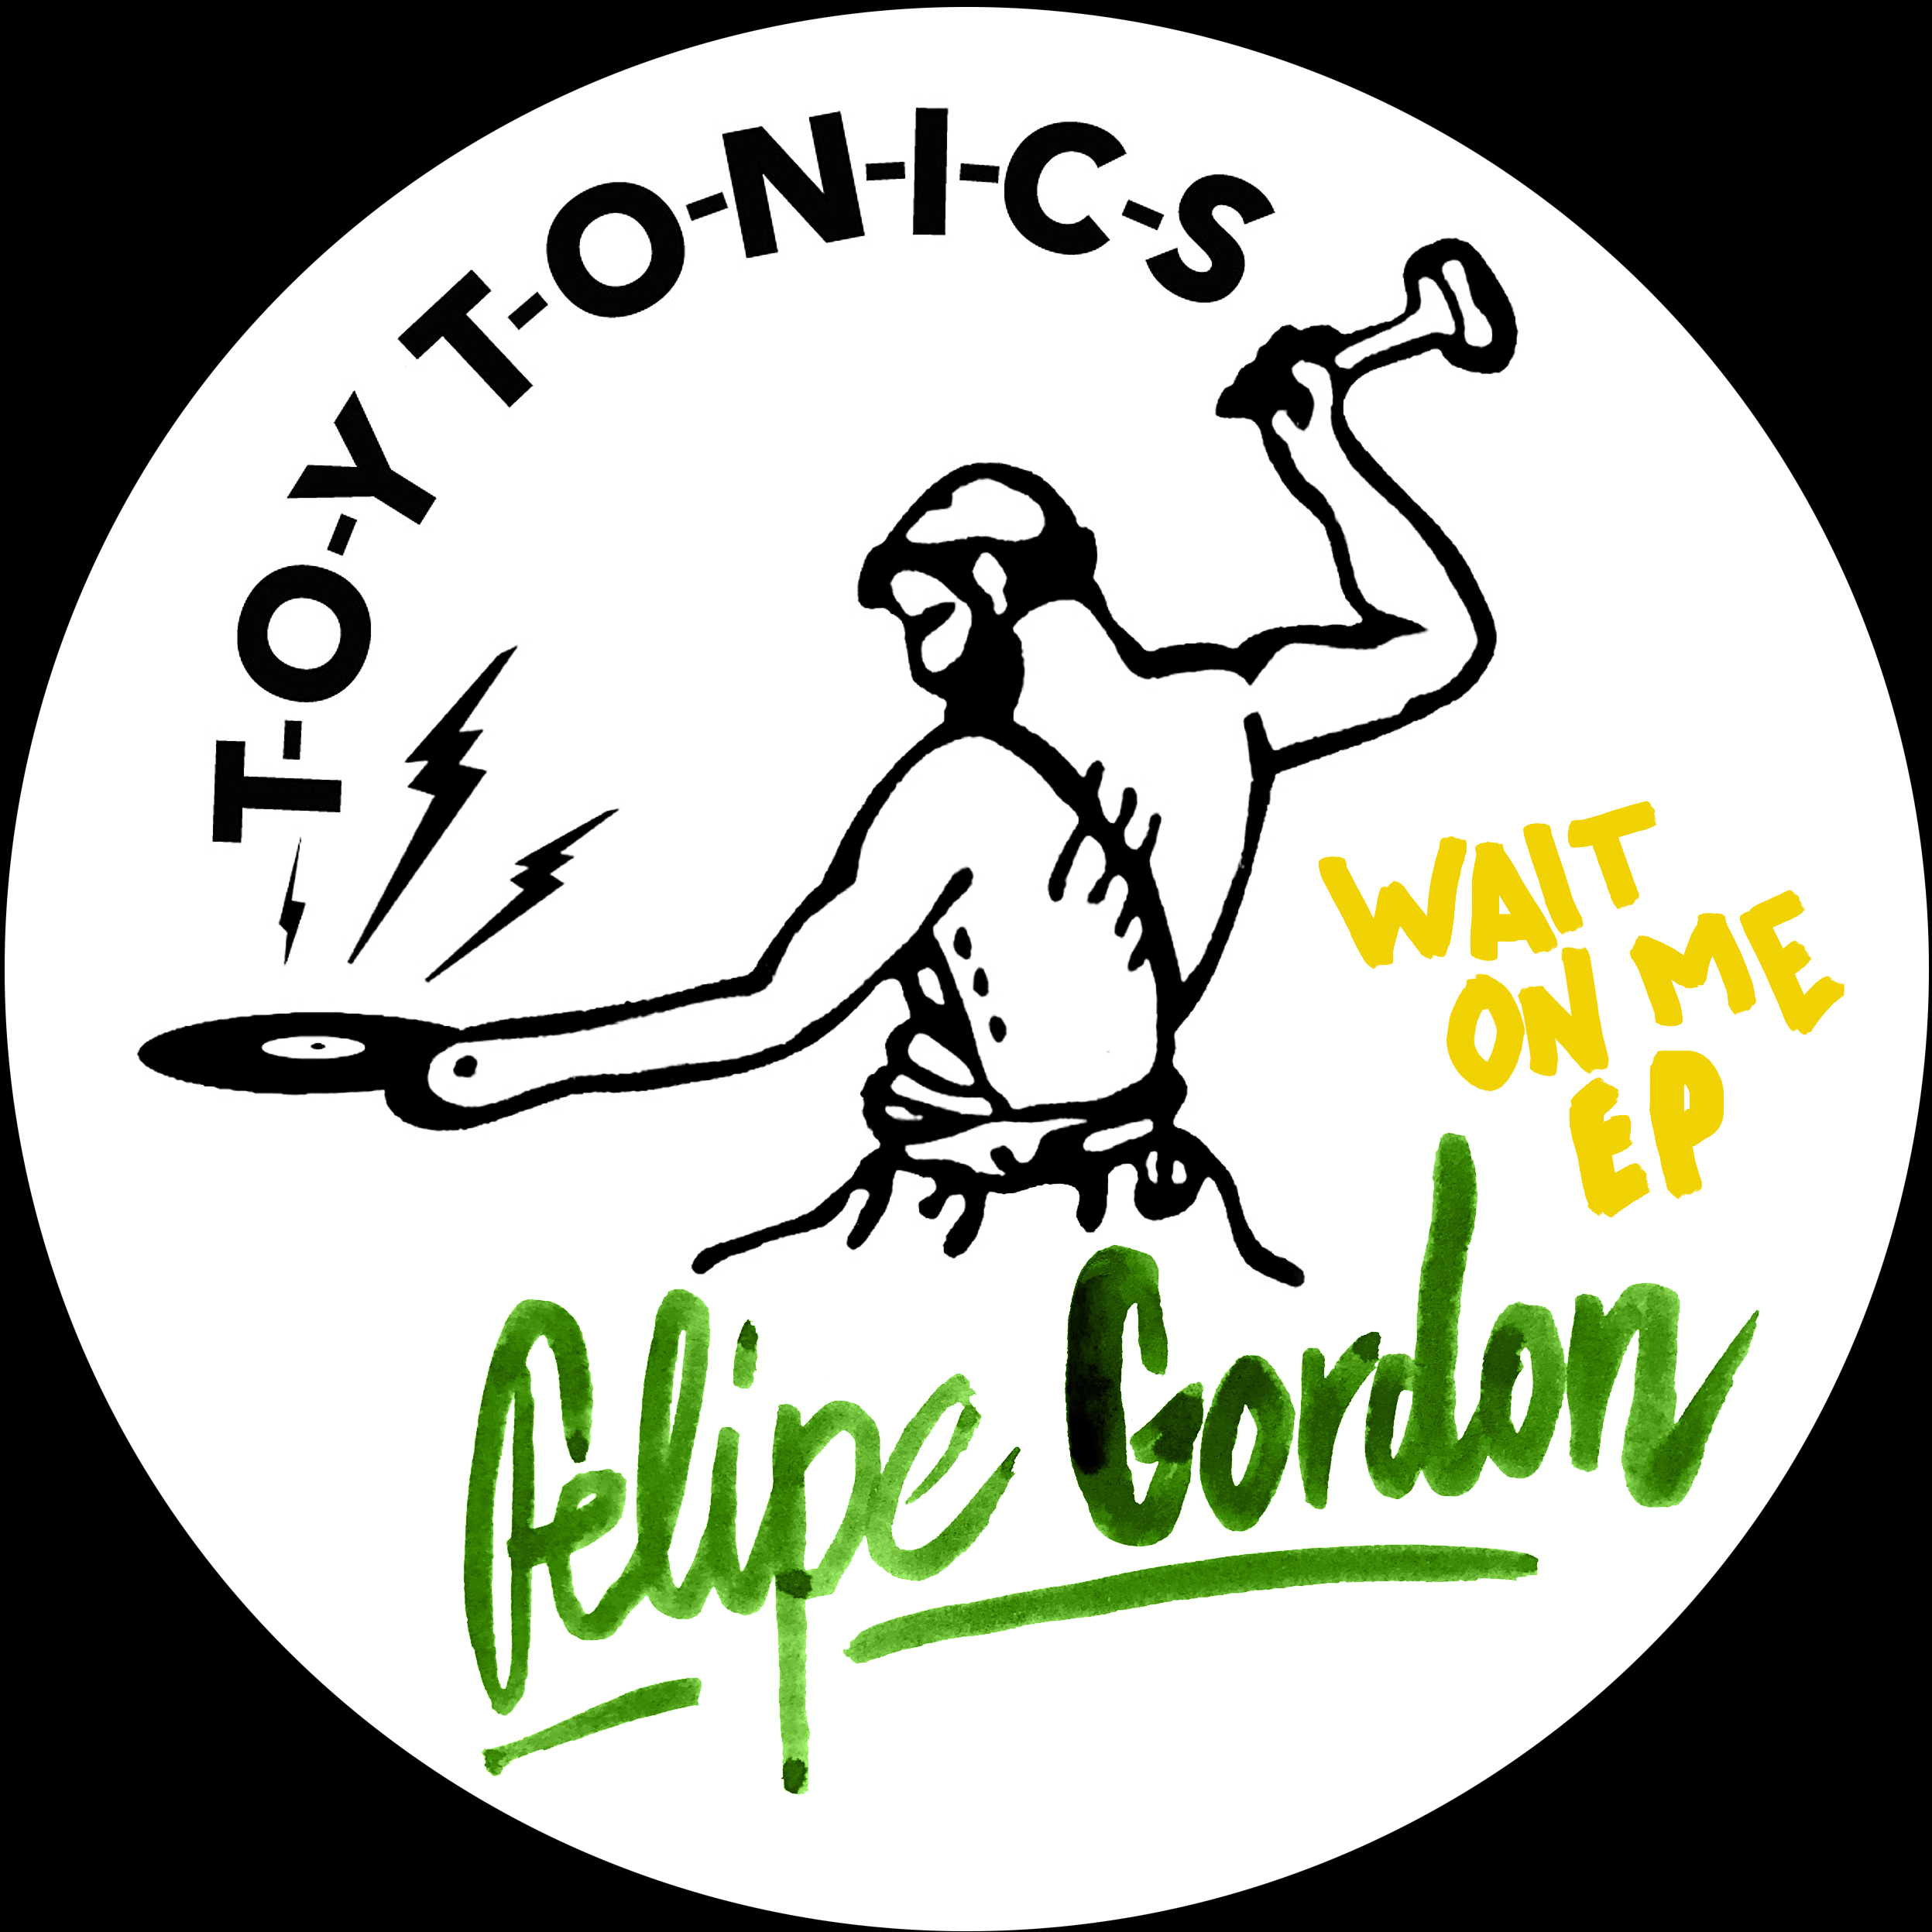 Felipe Gordon - Wait On Me [TOYT105]